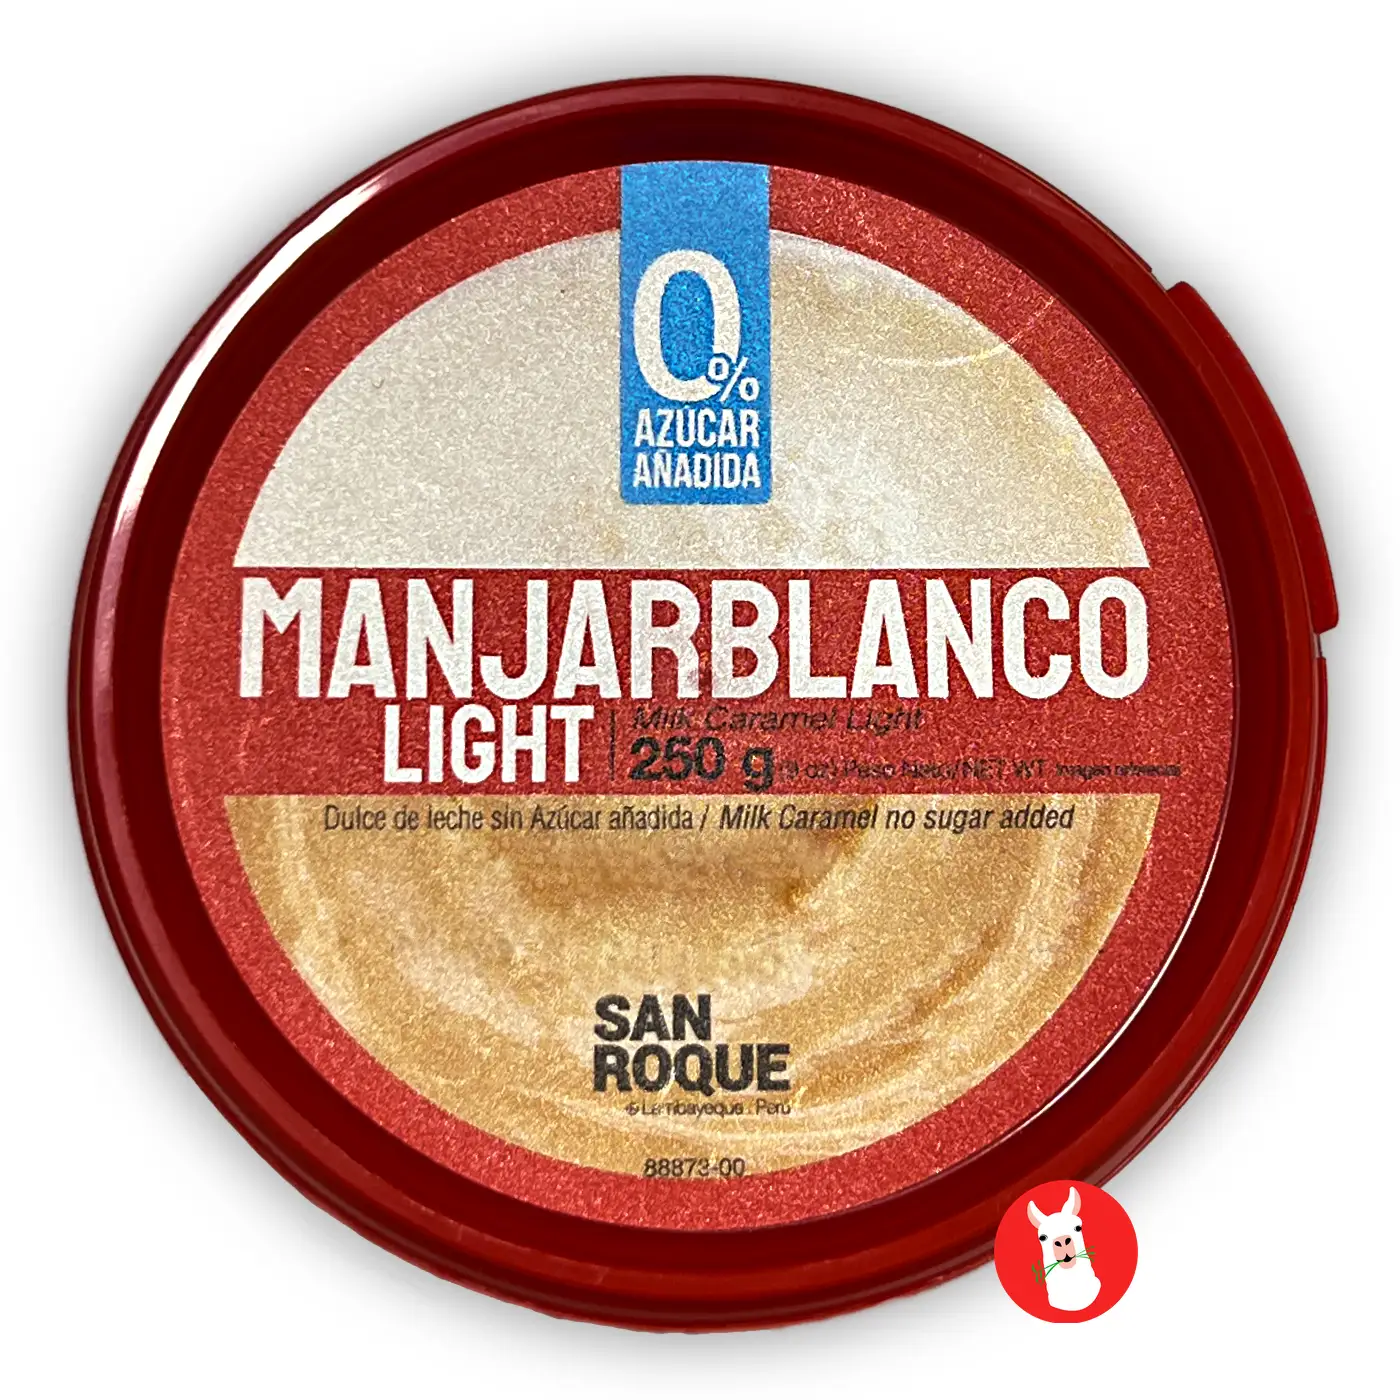 San Roque manjarblanco light 250 g top view